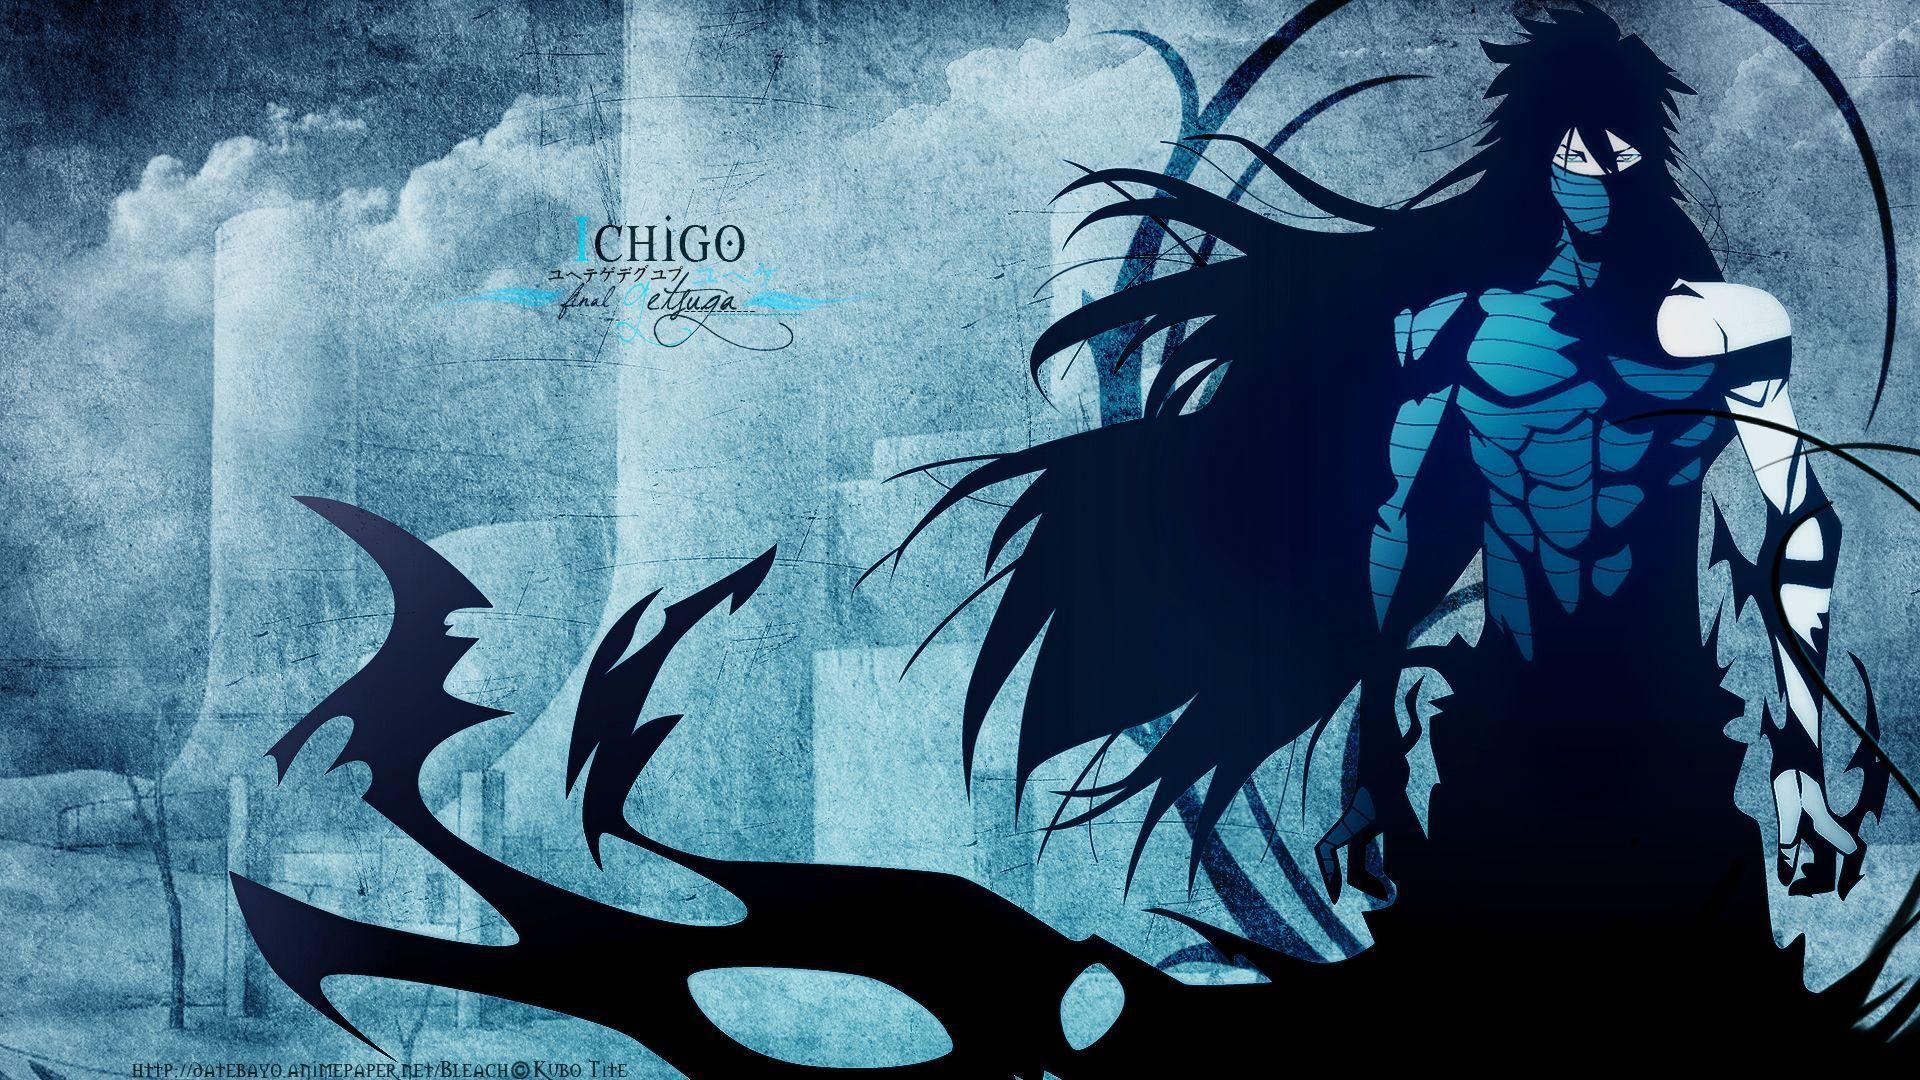 1920x1080 Bleach Ichigo Hình nền cuối cùng Hình nền Ichigo Kurosaki Hình nền Hình nền Hình ảnh Bleach Ichigo Hình nền Miễn phí.  Kurosaki ichigo, Anime, Sousuke aizen